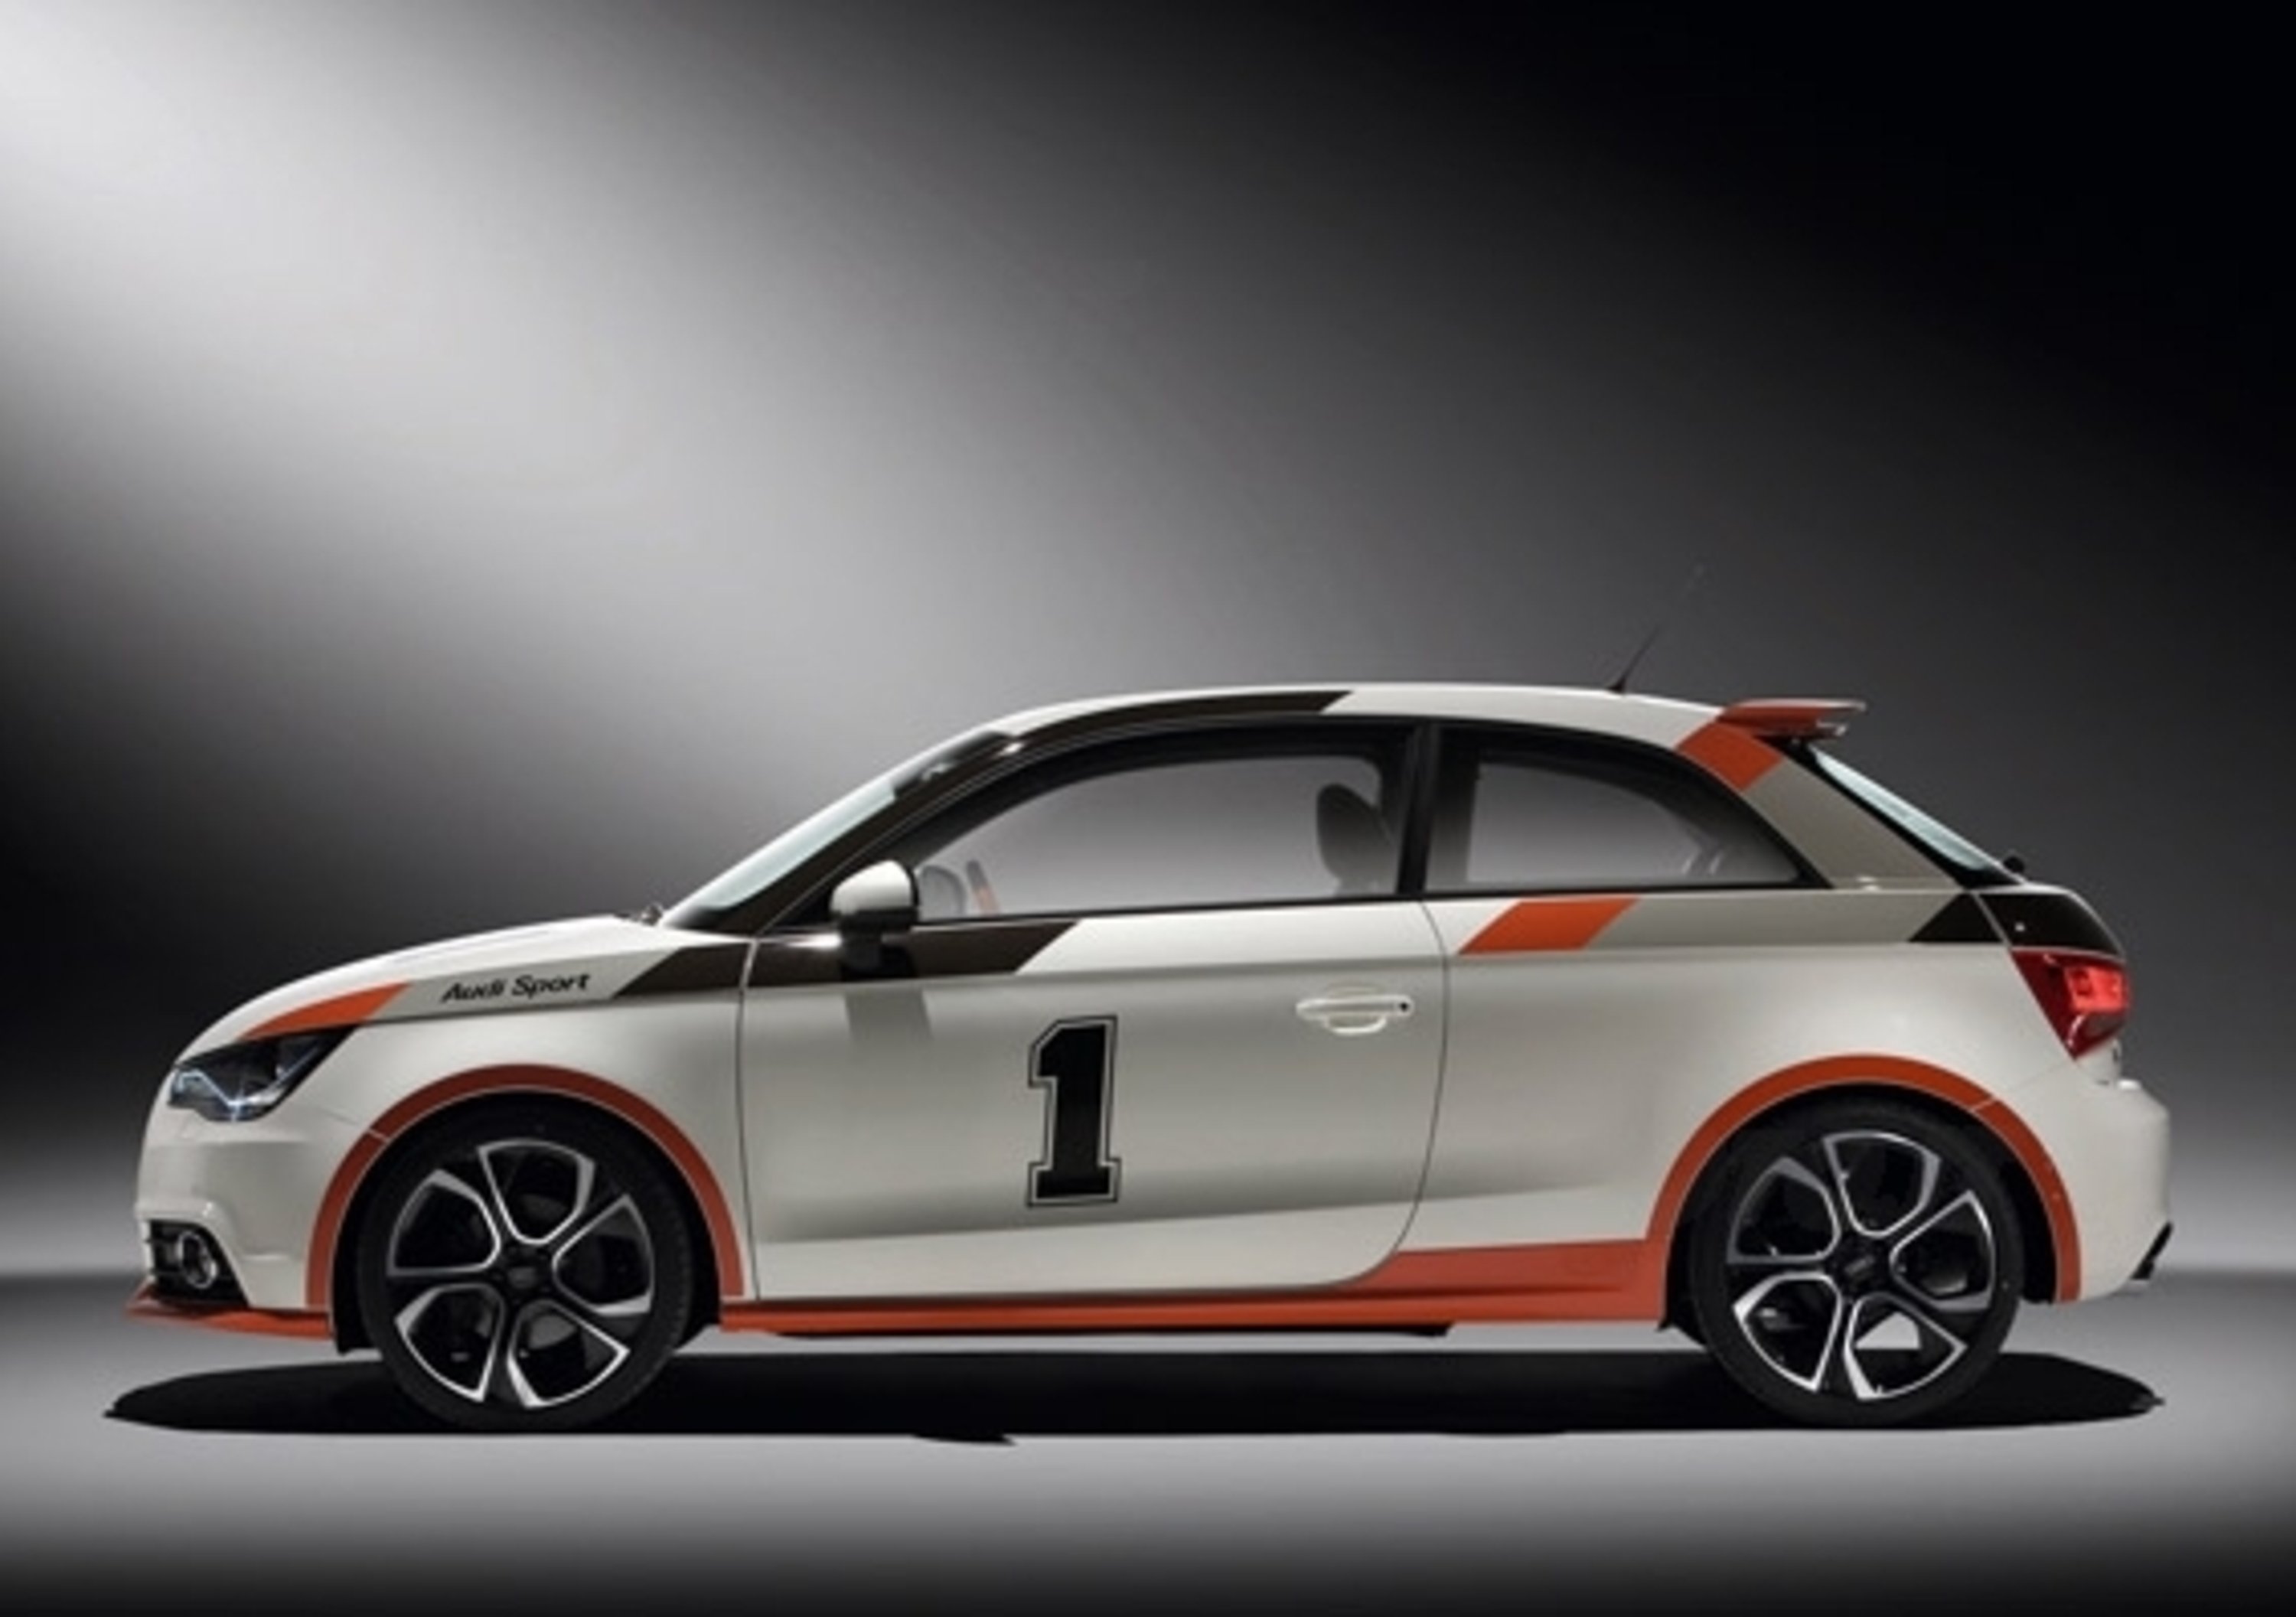 Audi A1 2011: in arrivo nuovi pacchetti di accessori 